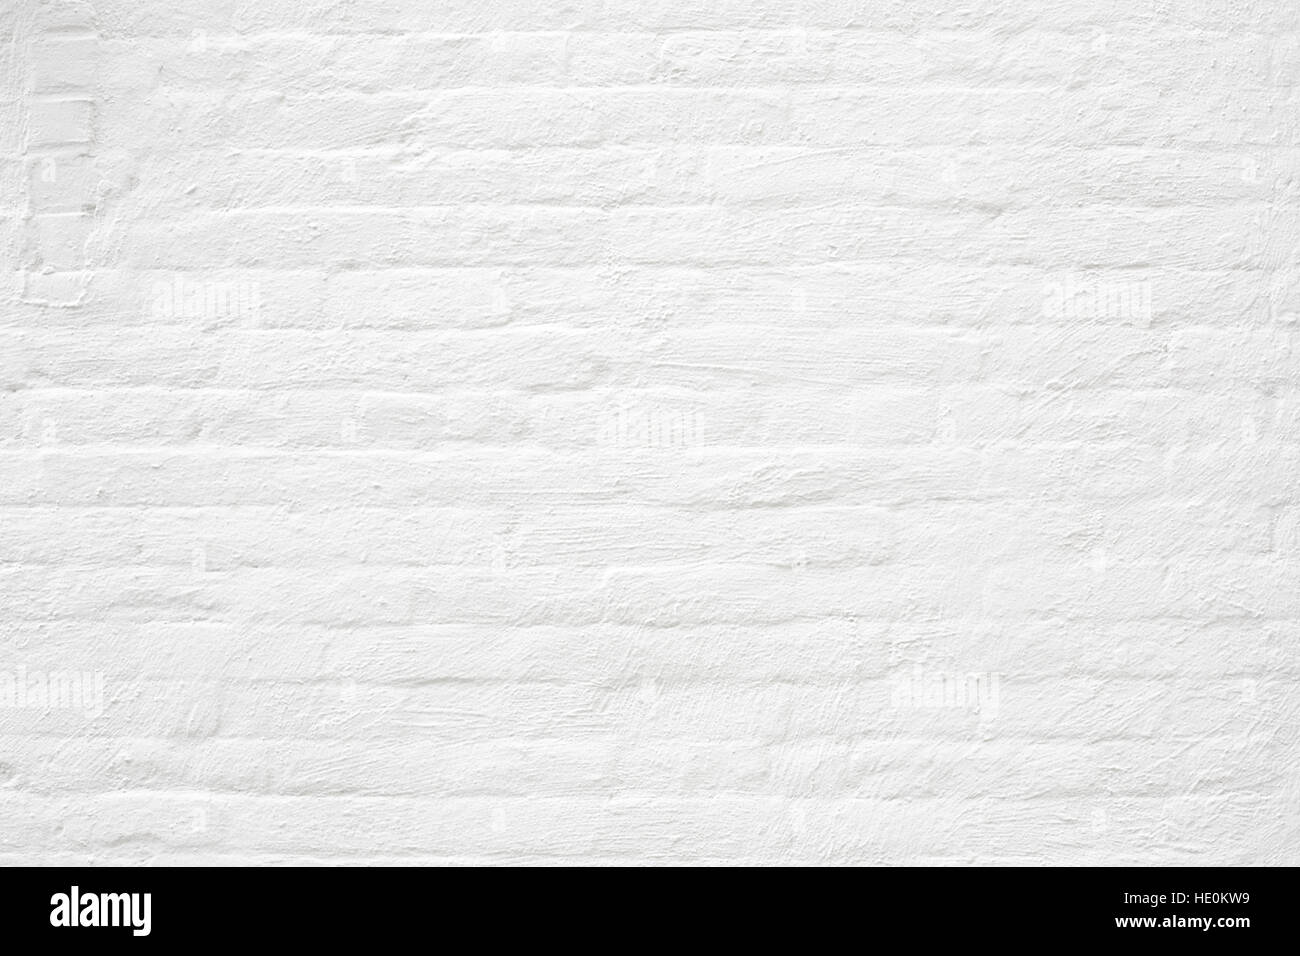 white-brick-wall-texture-background-stock-photo-alamy